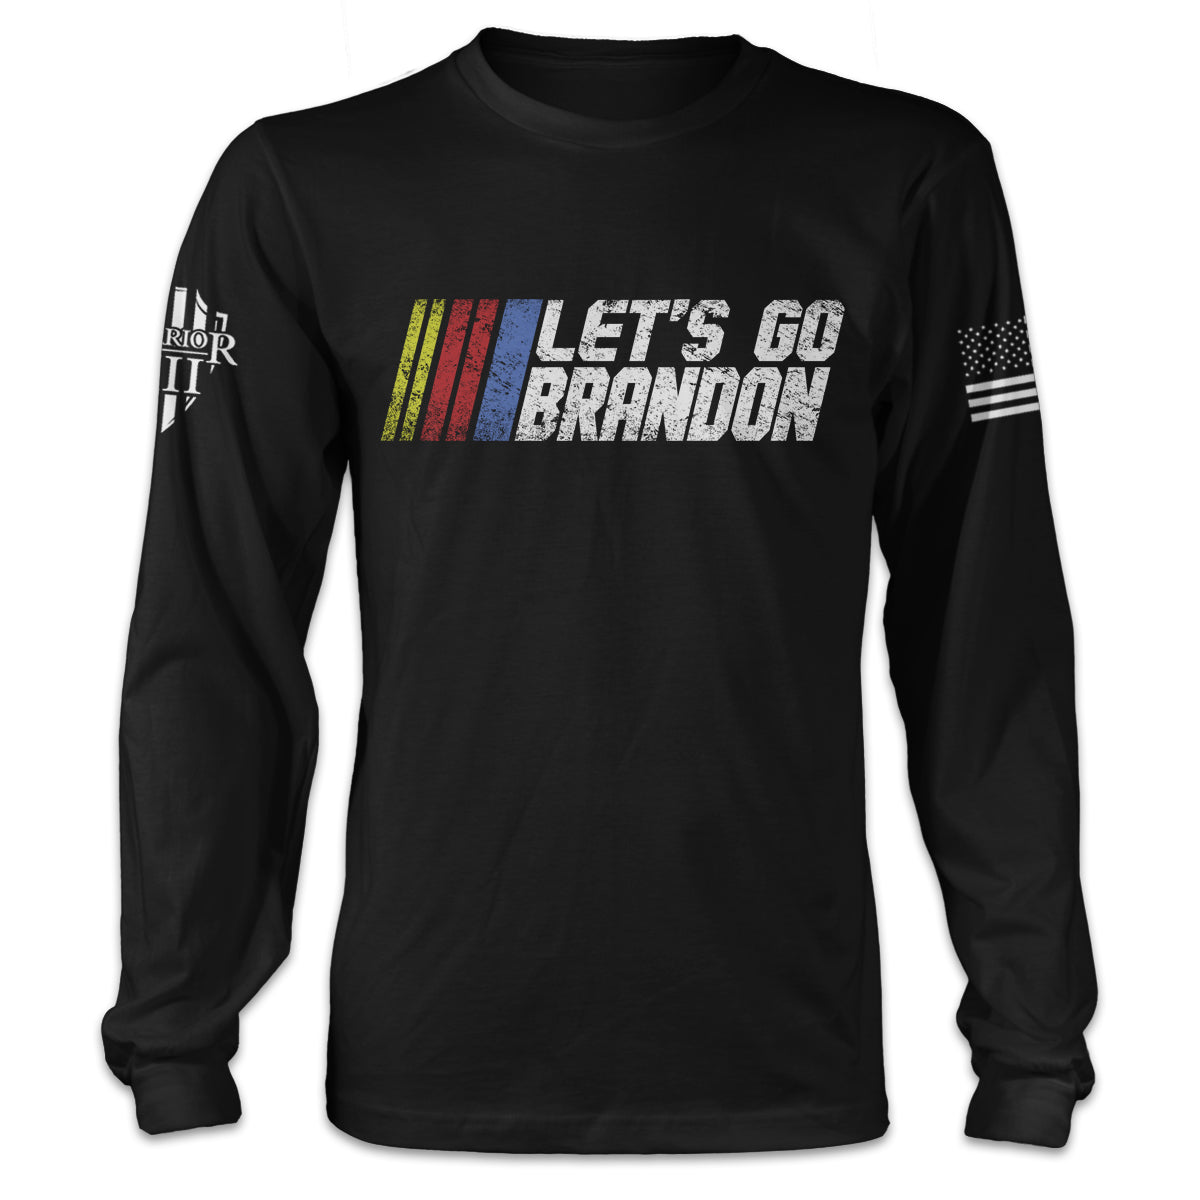 Let's Go Brandon - Long Sleeve